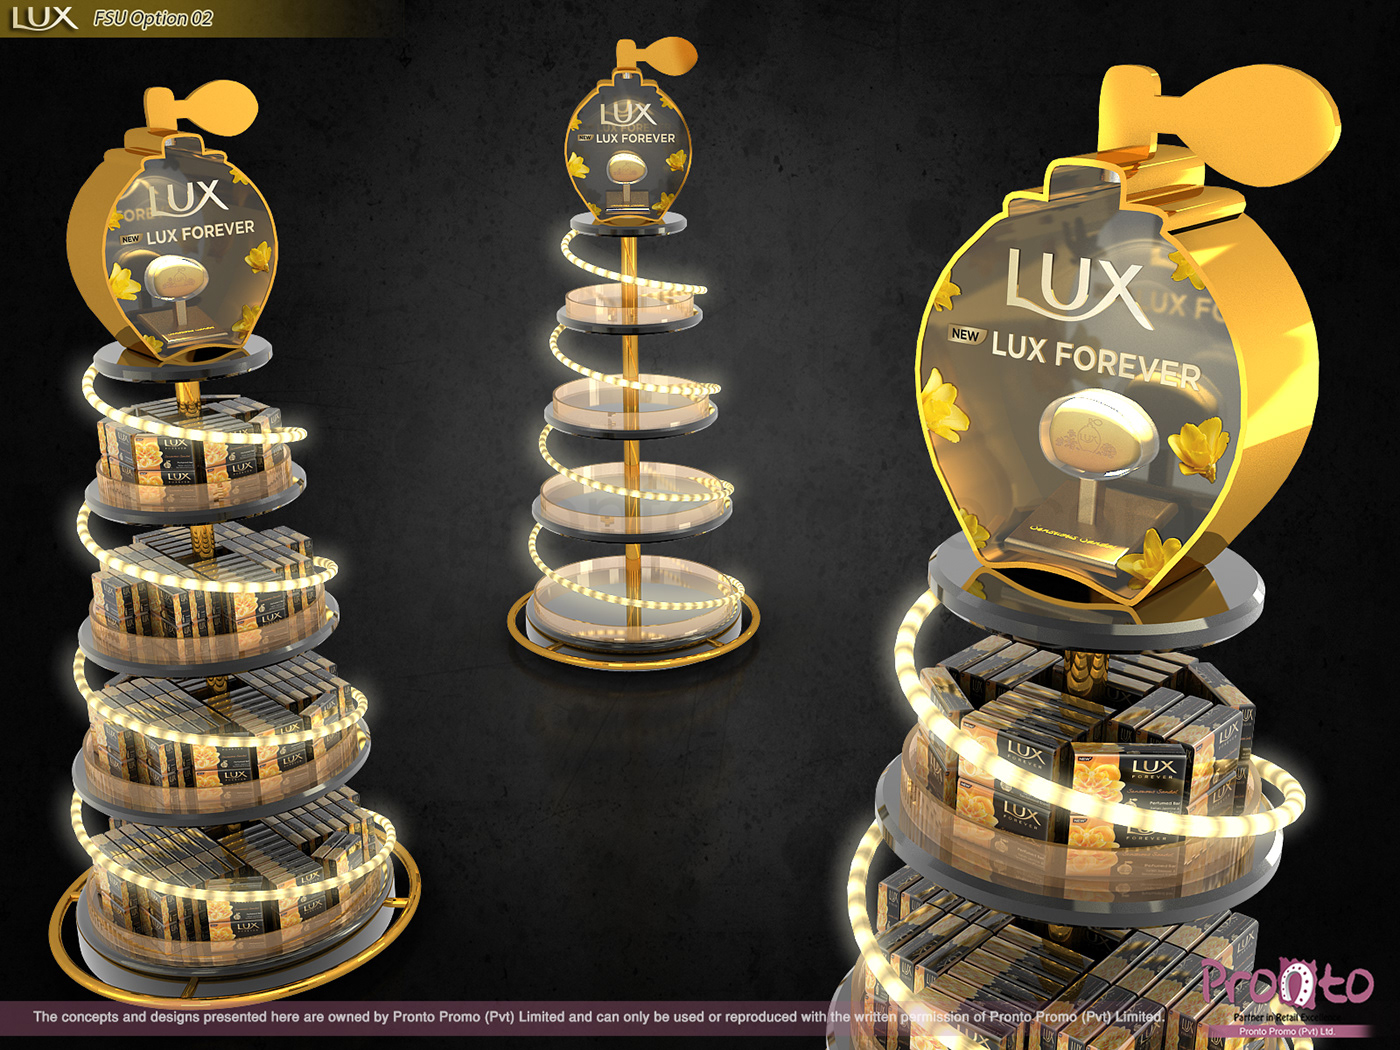 Lux gold launch OCD FSU Stand Display pop pos posm